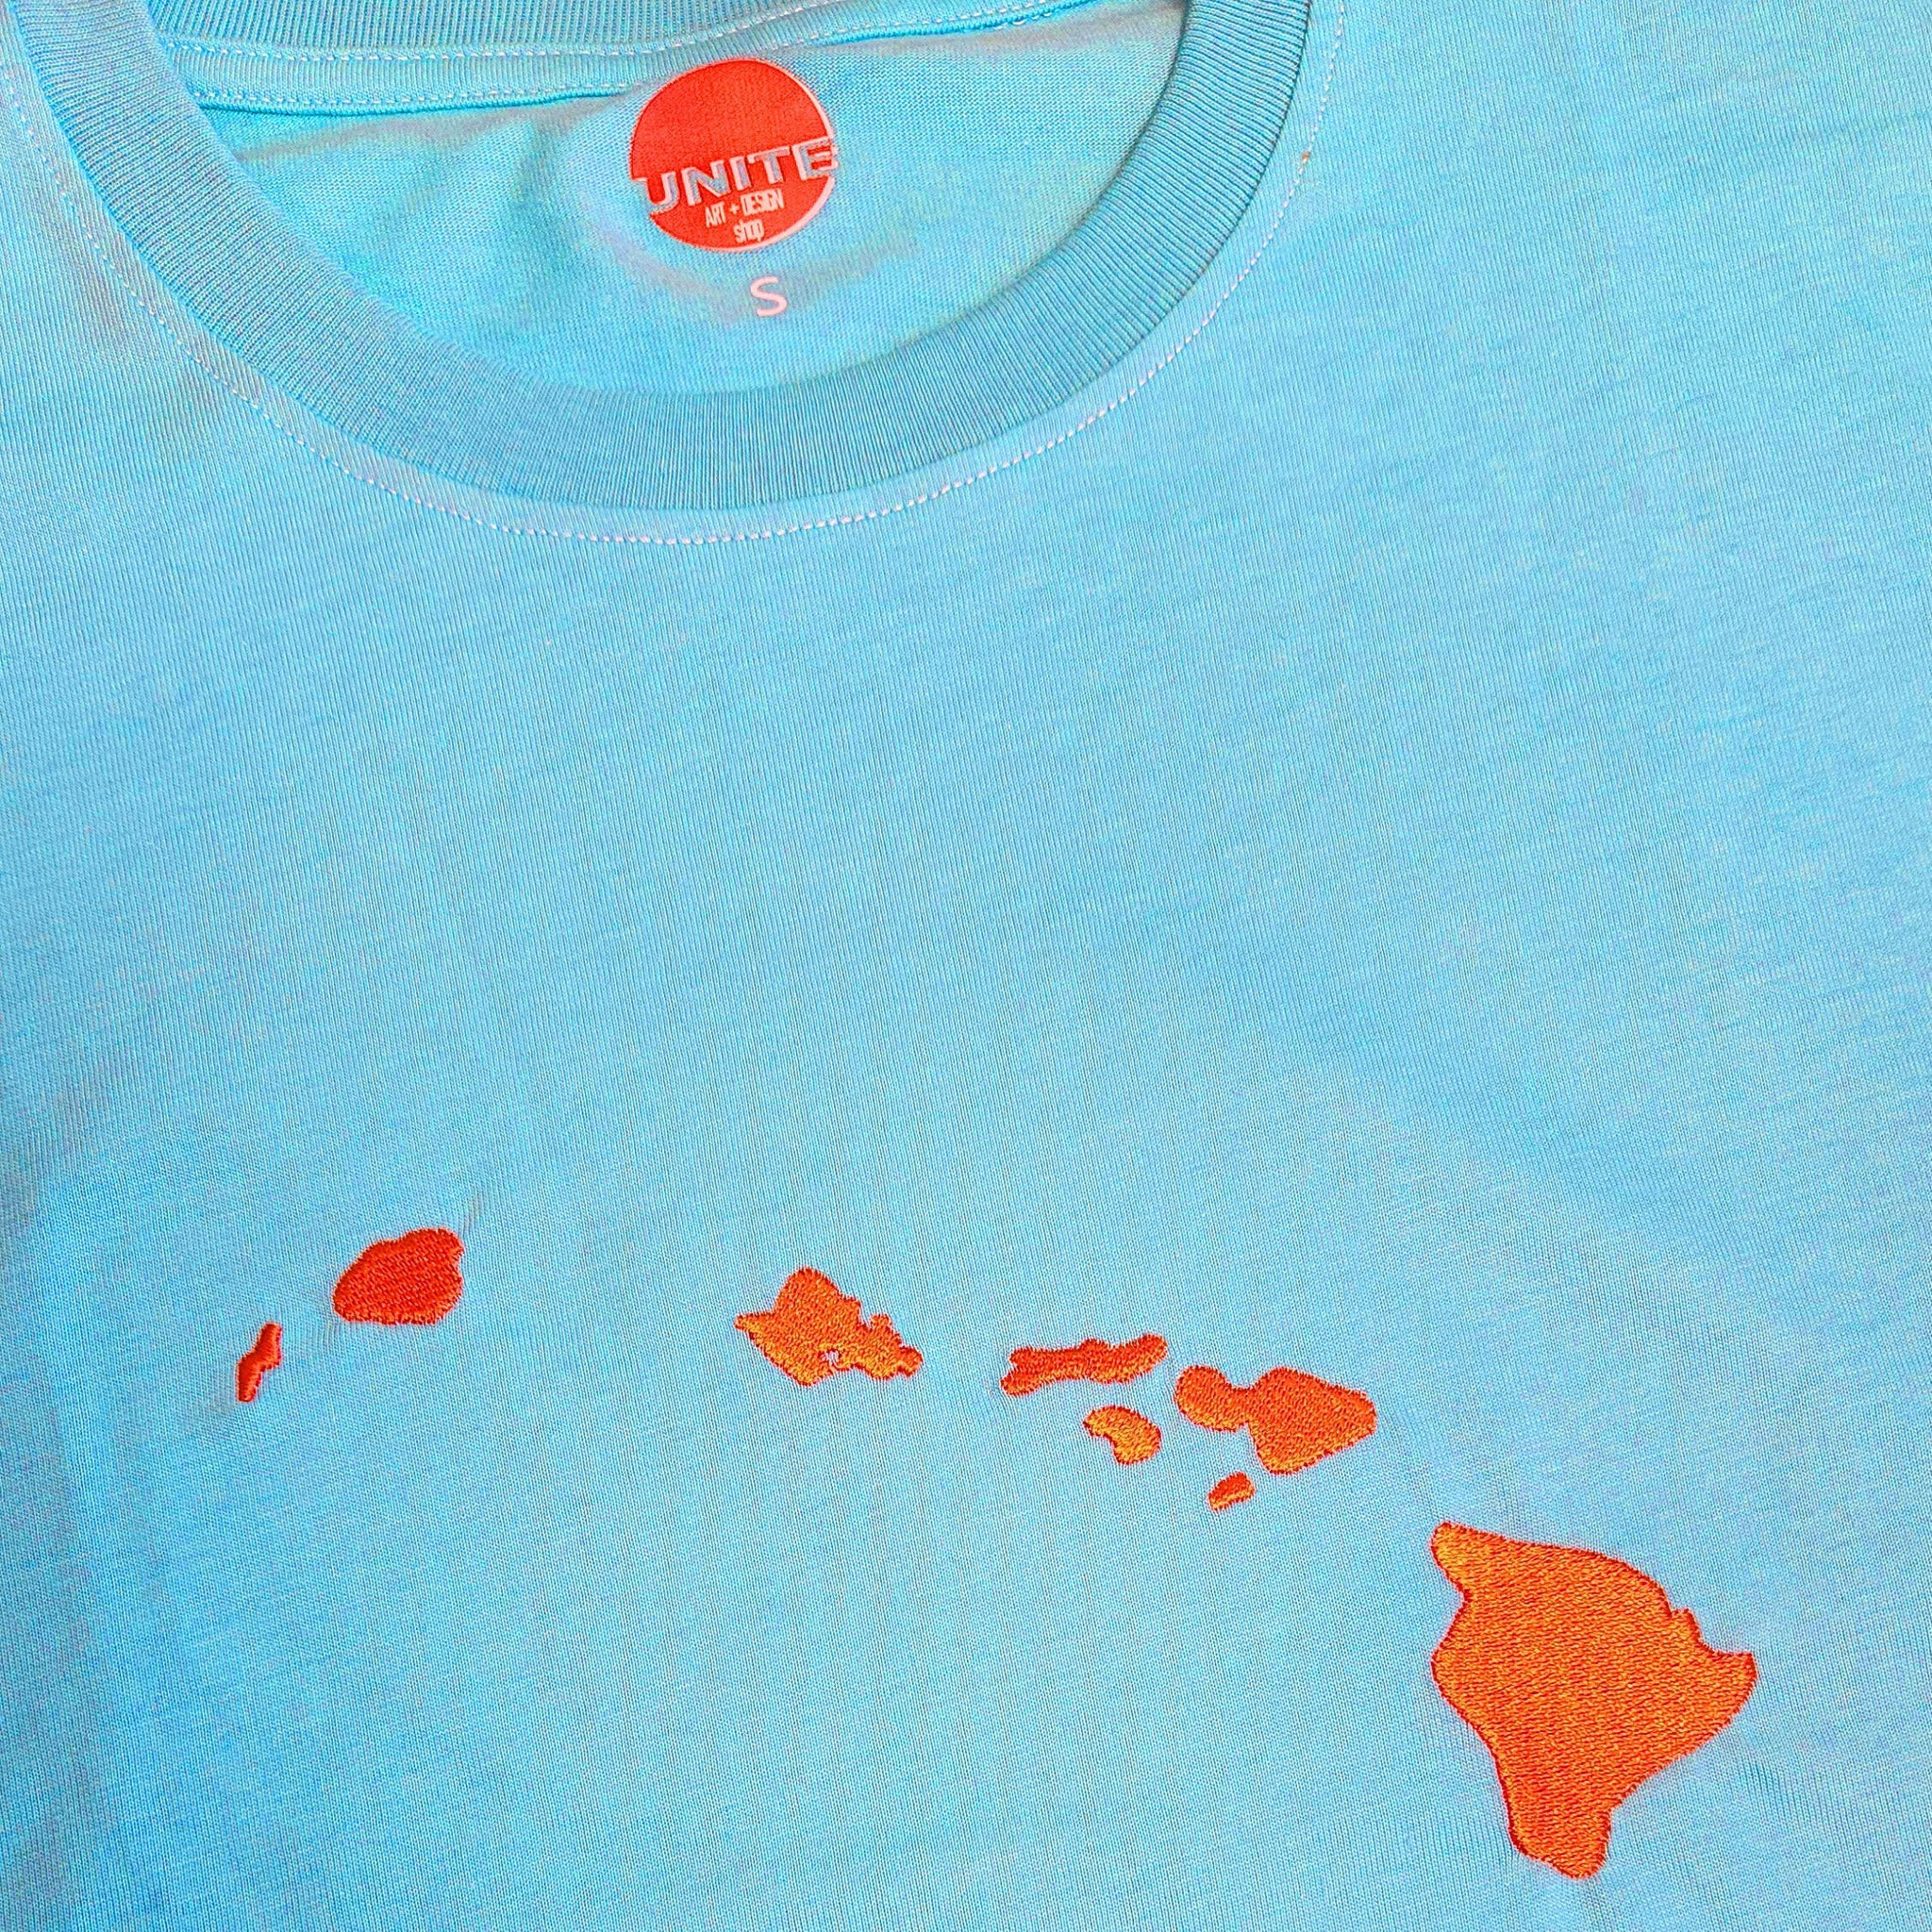 Hawaiian Island Chain - T-shirt